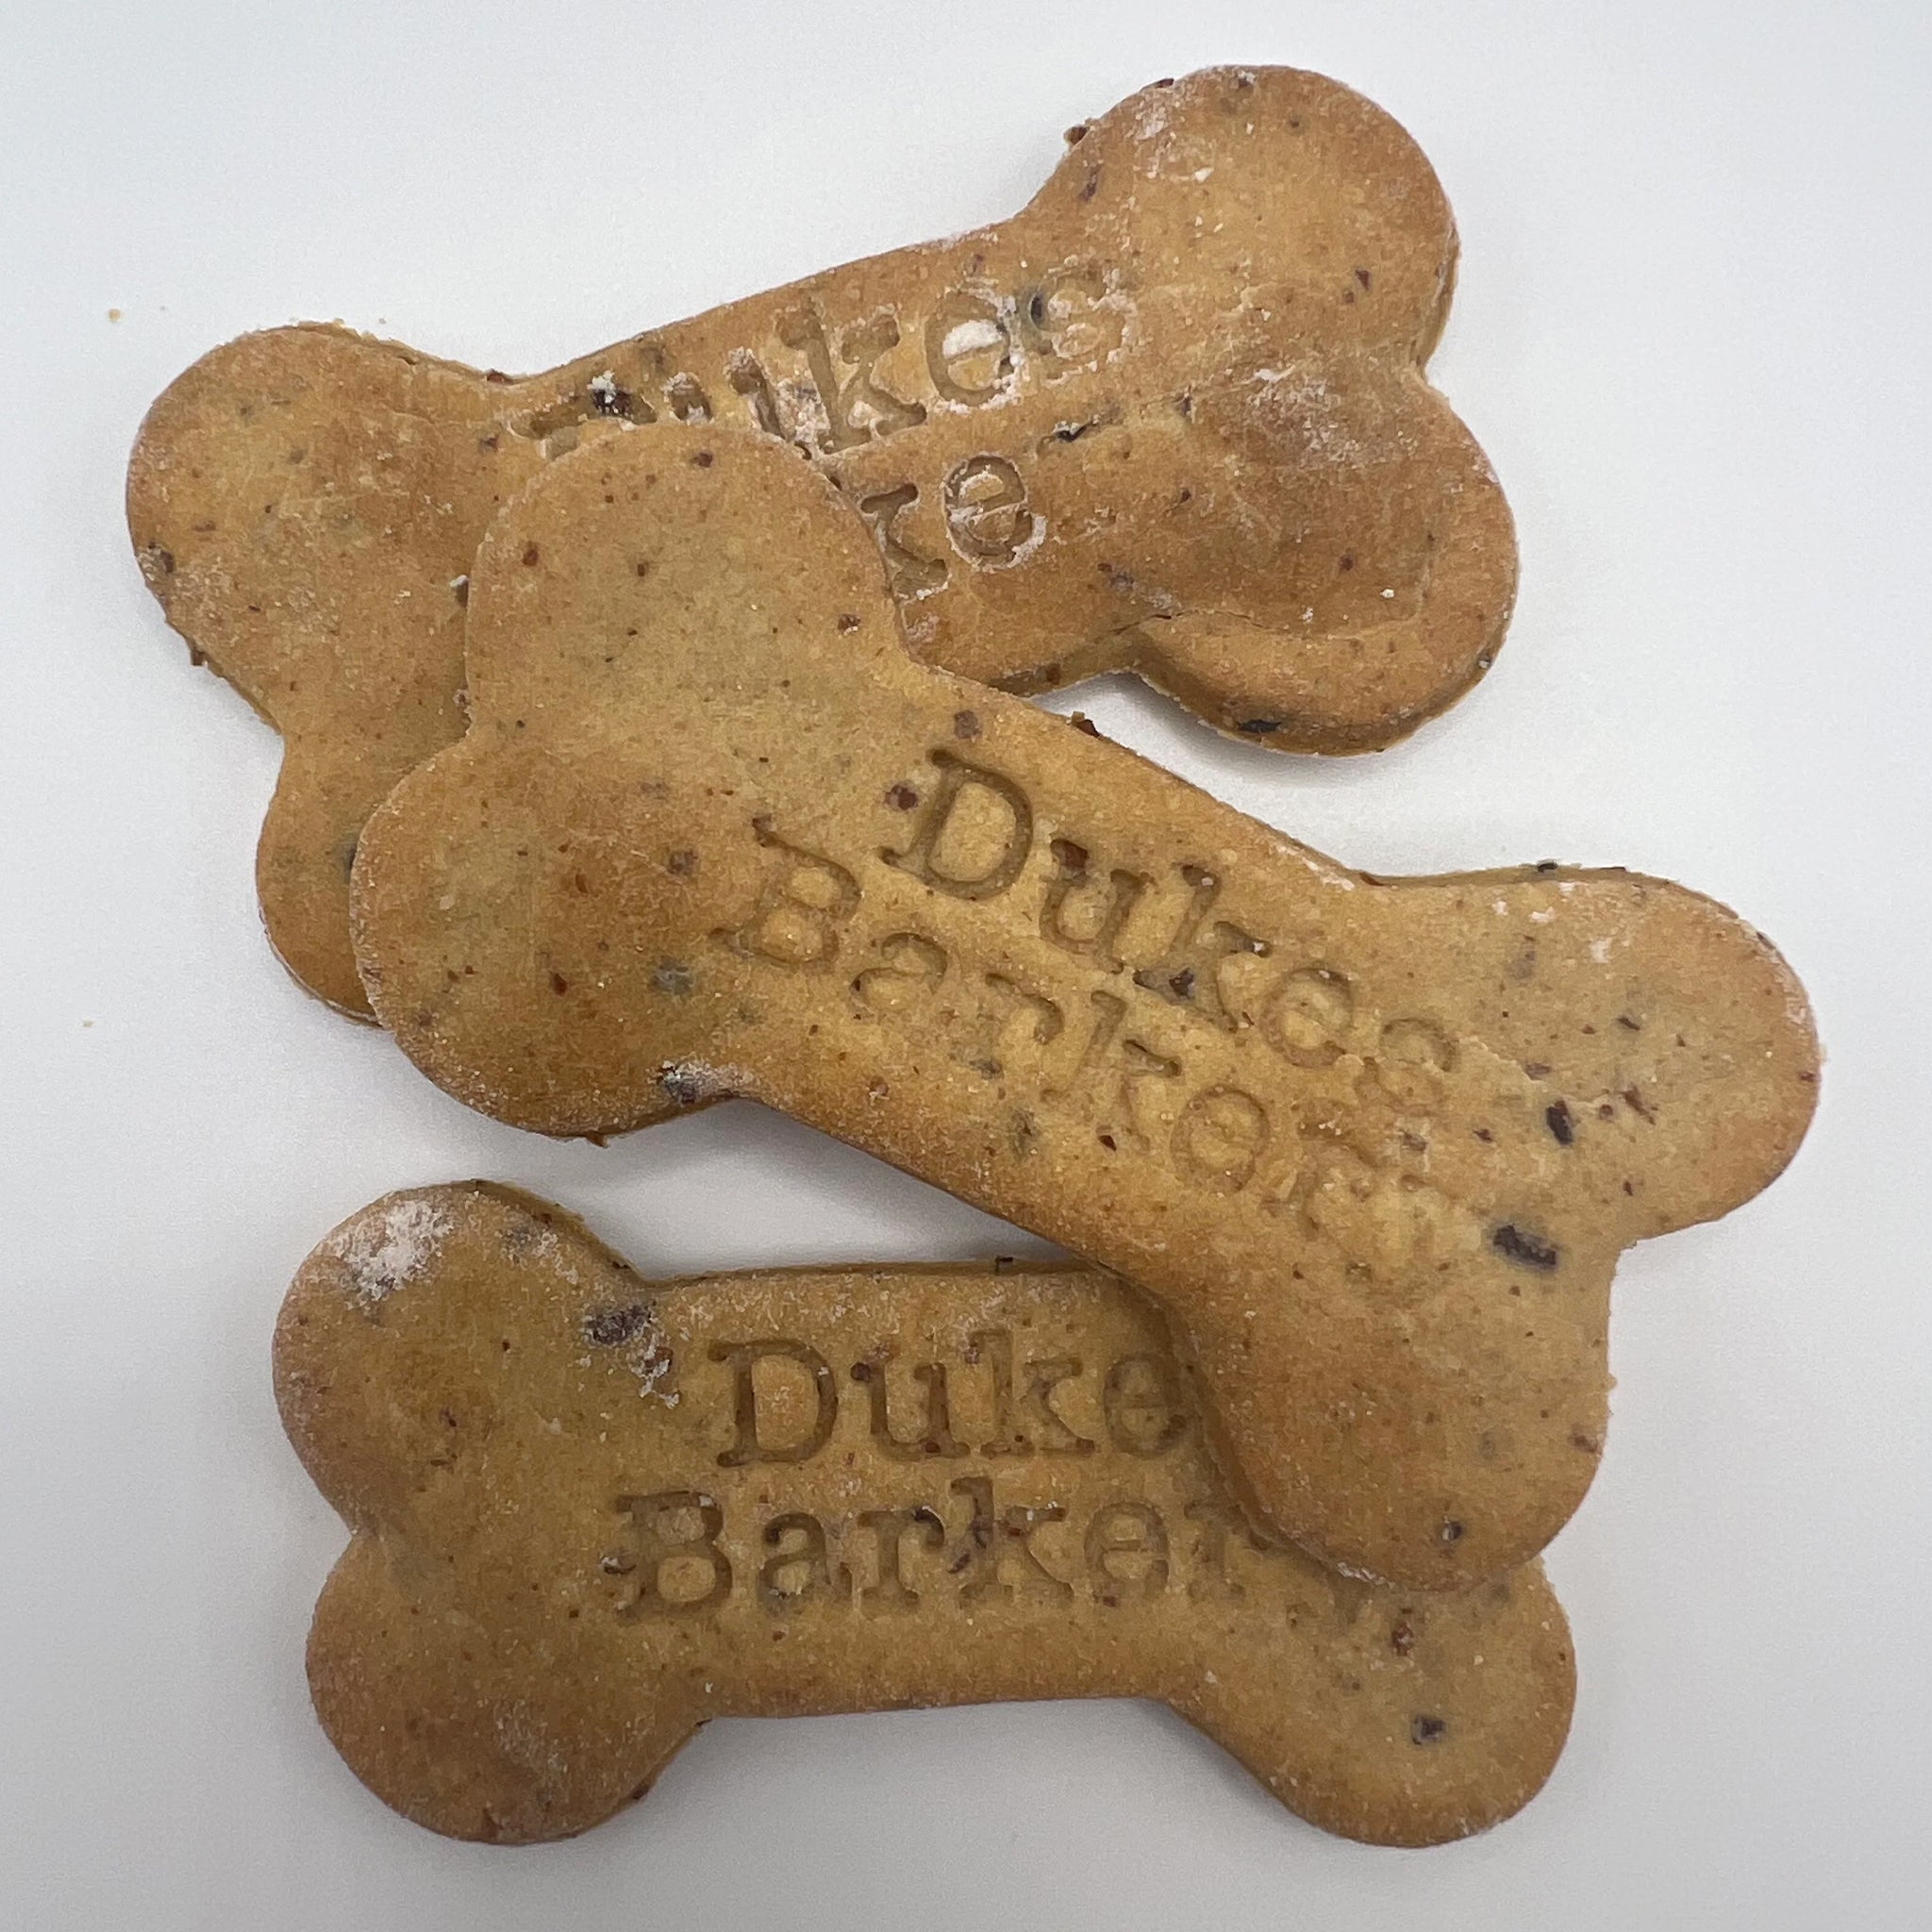 Dukes Barkery Dog Cookies - Plain